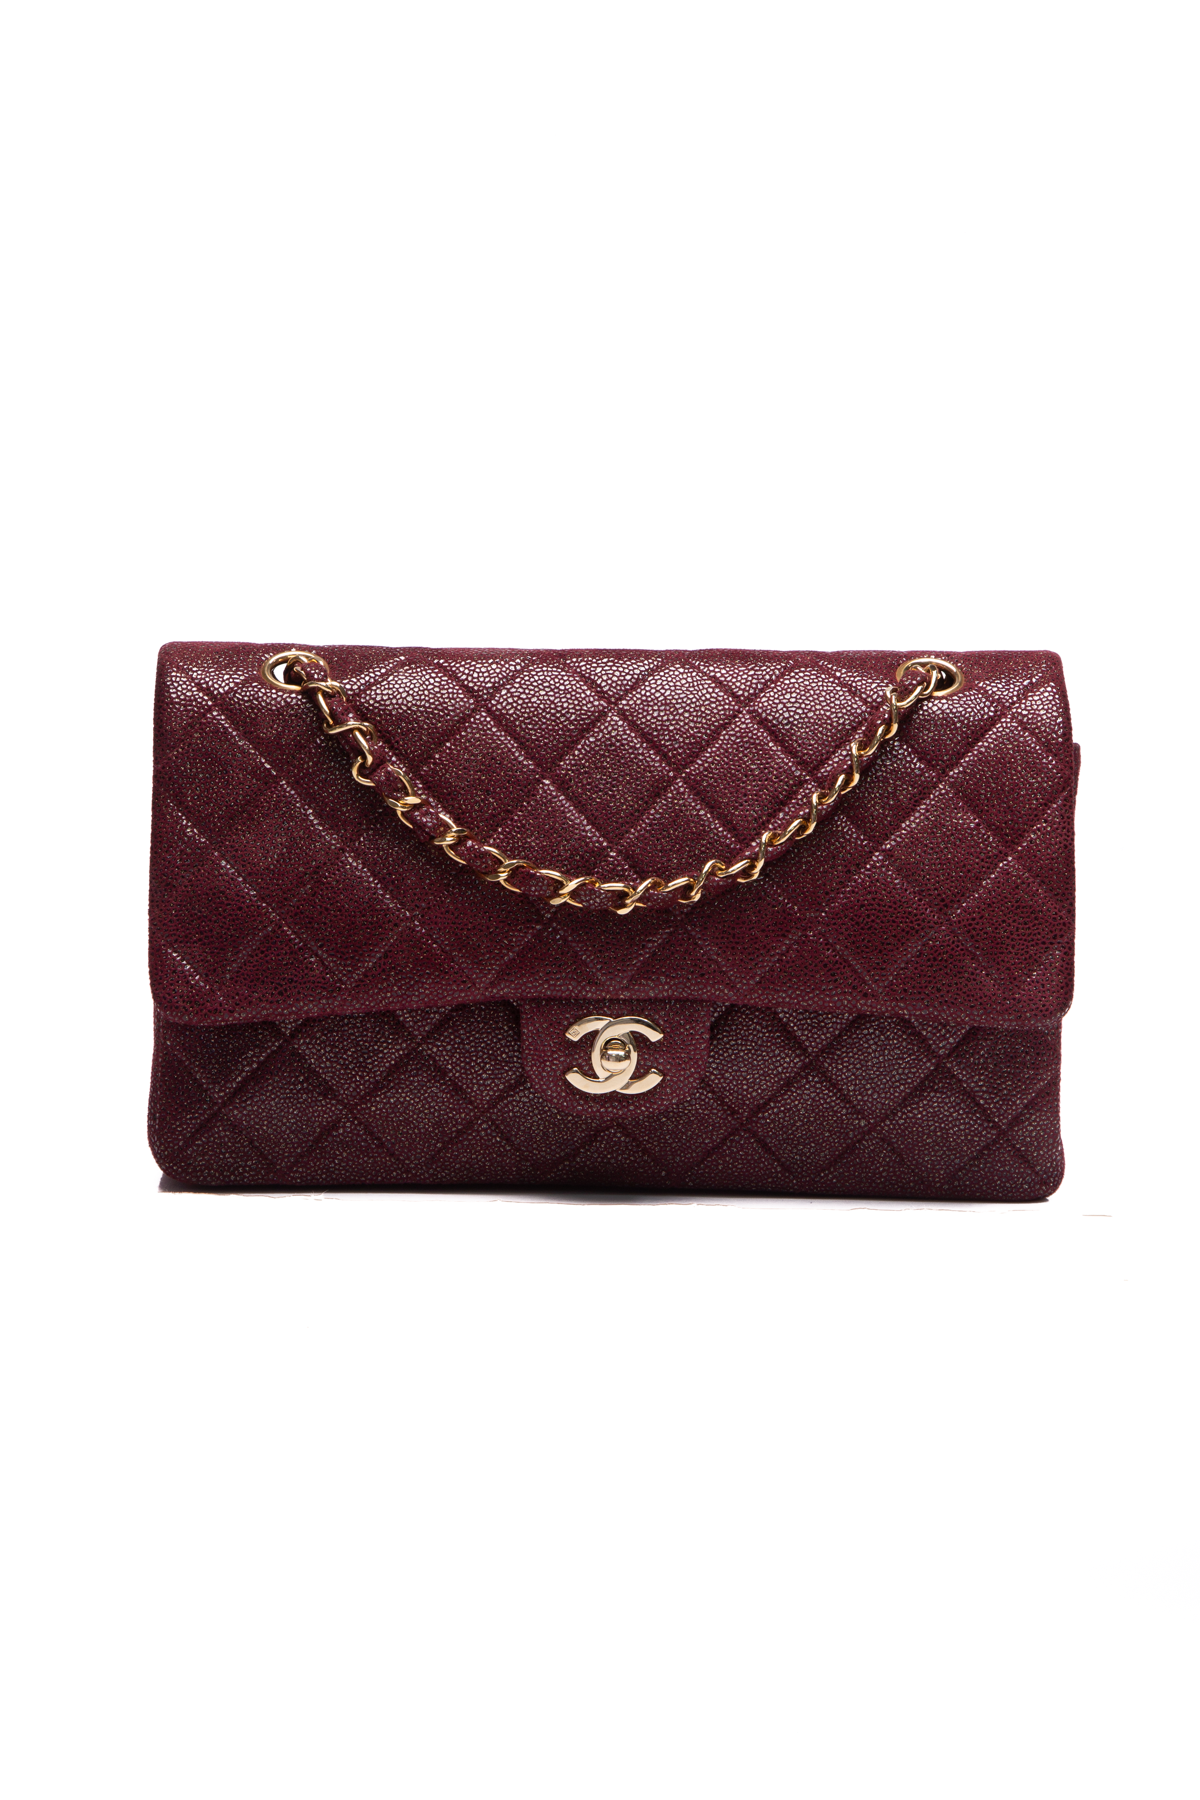 Chanel Medium Burgundy Double Flap Bag - shop 